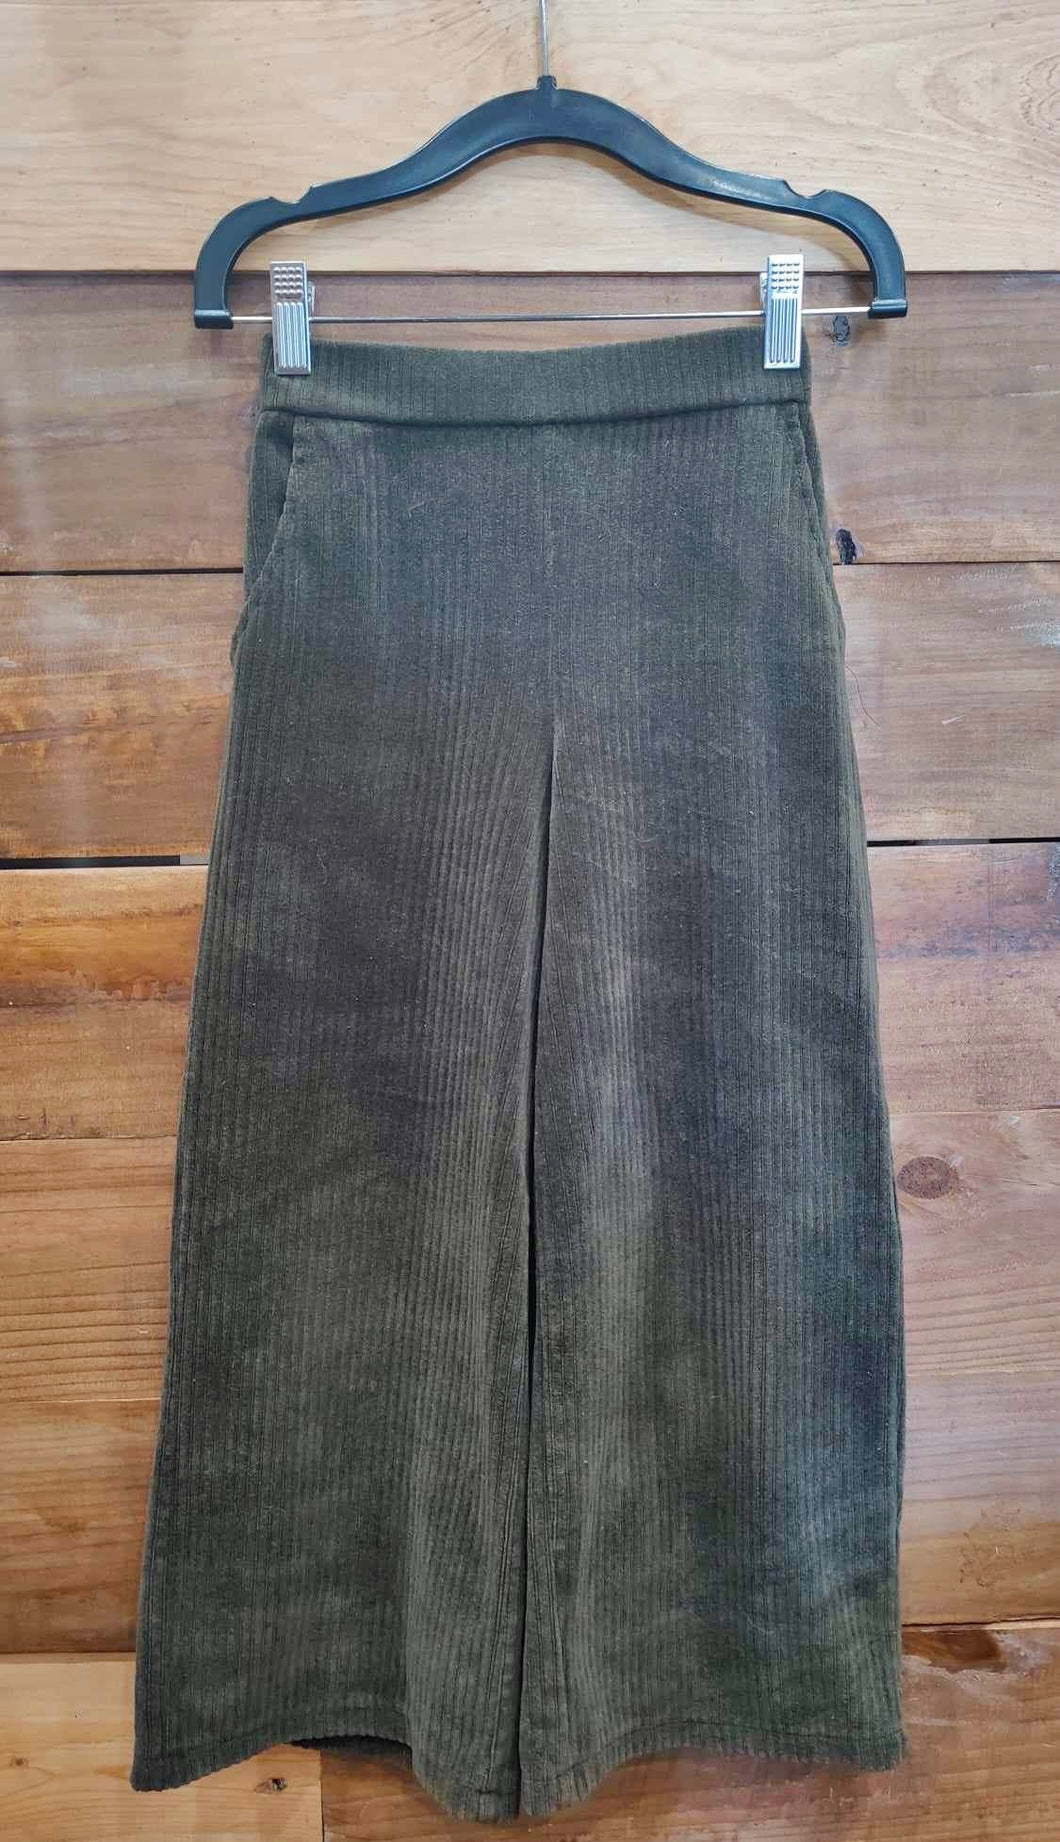 Zara Olive Green Pants Size 8